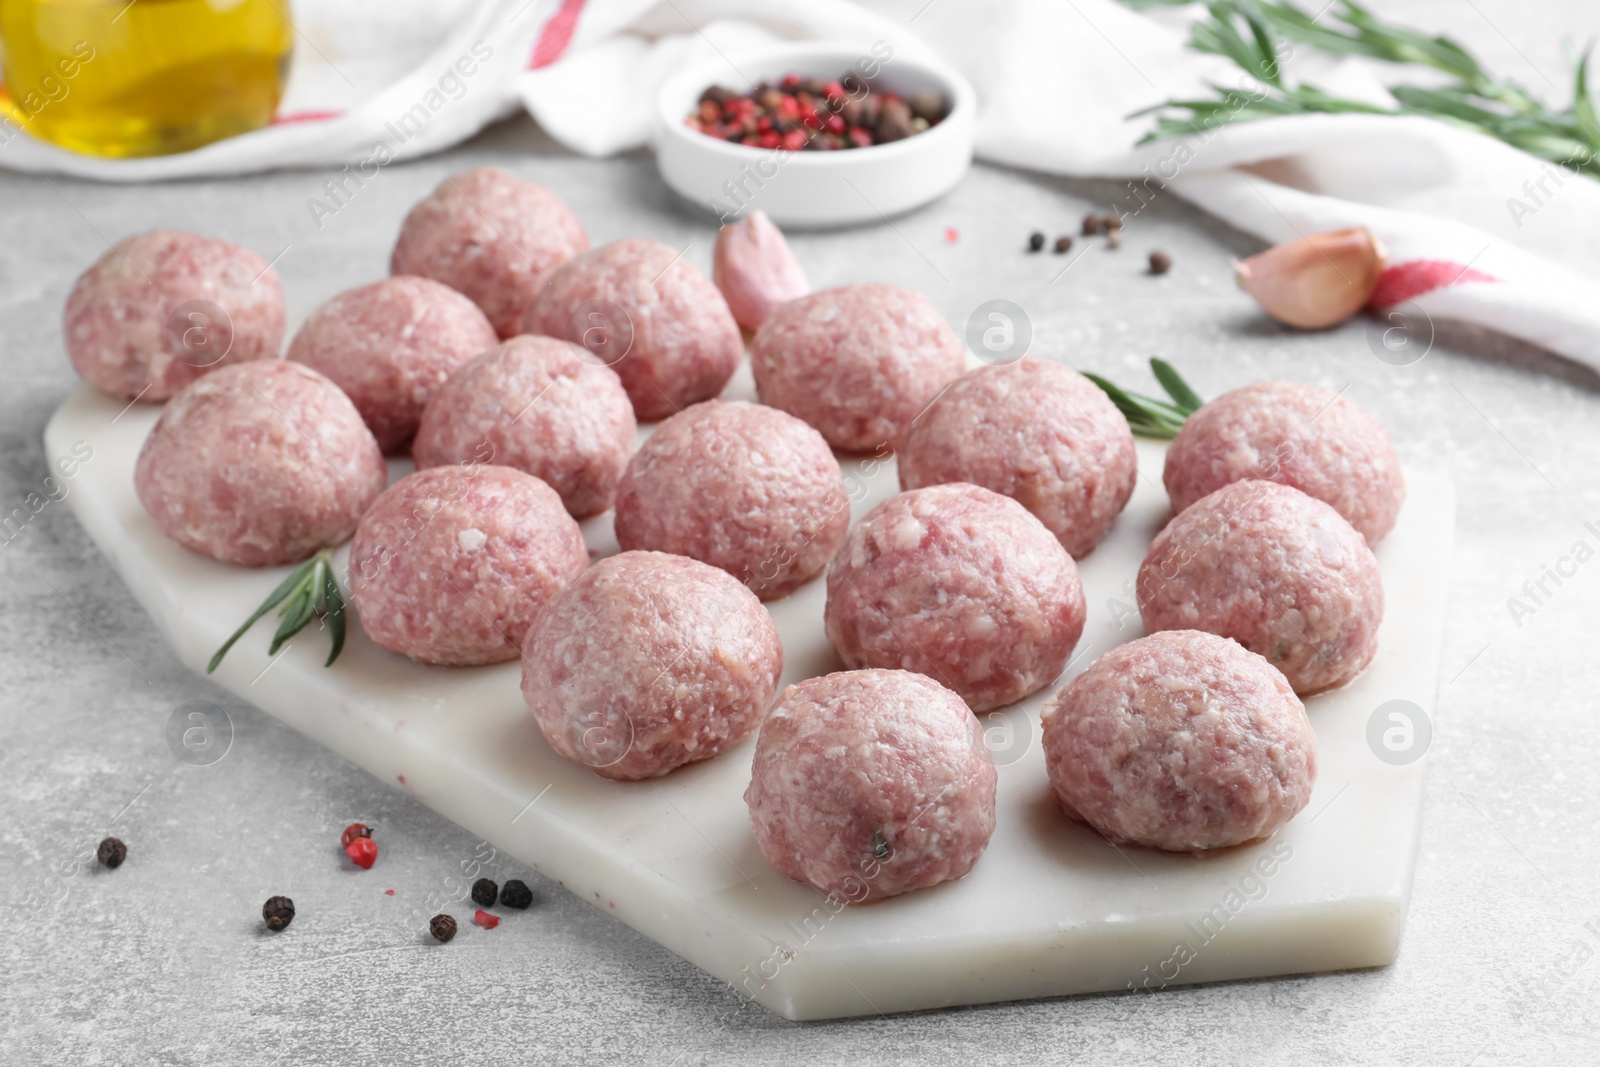 Photo of Many fresh raw meatballs on light grey table